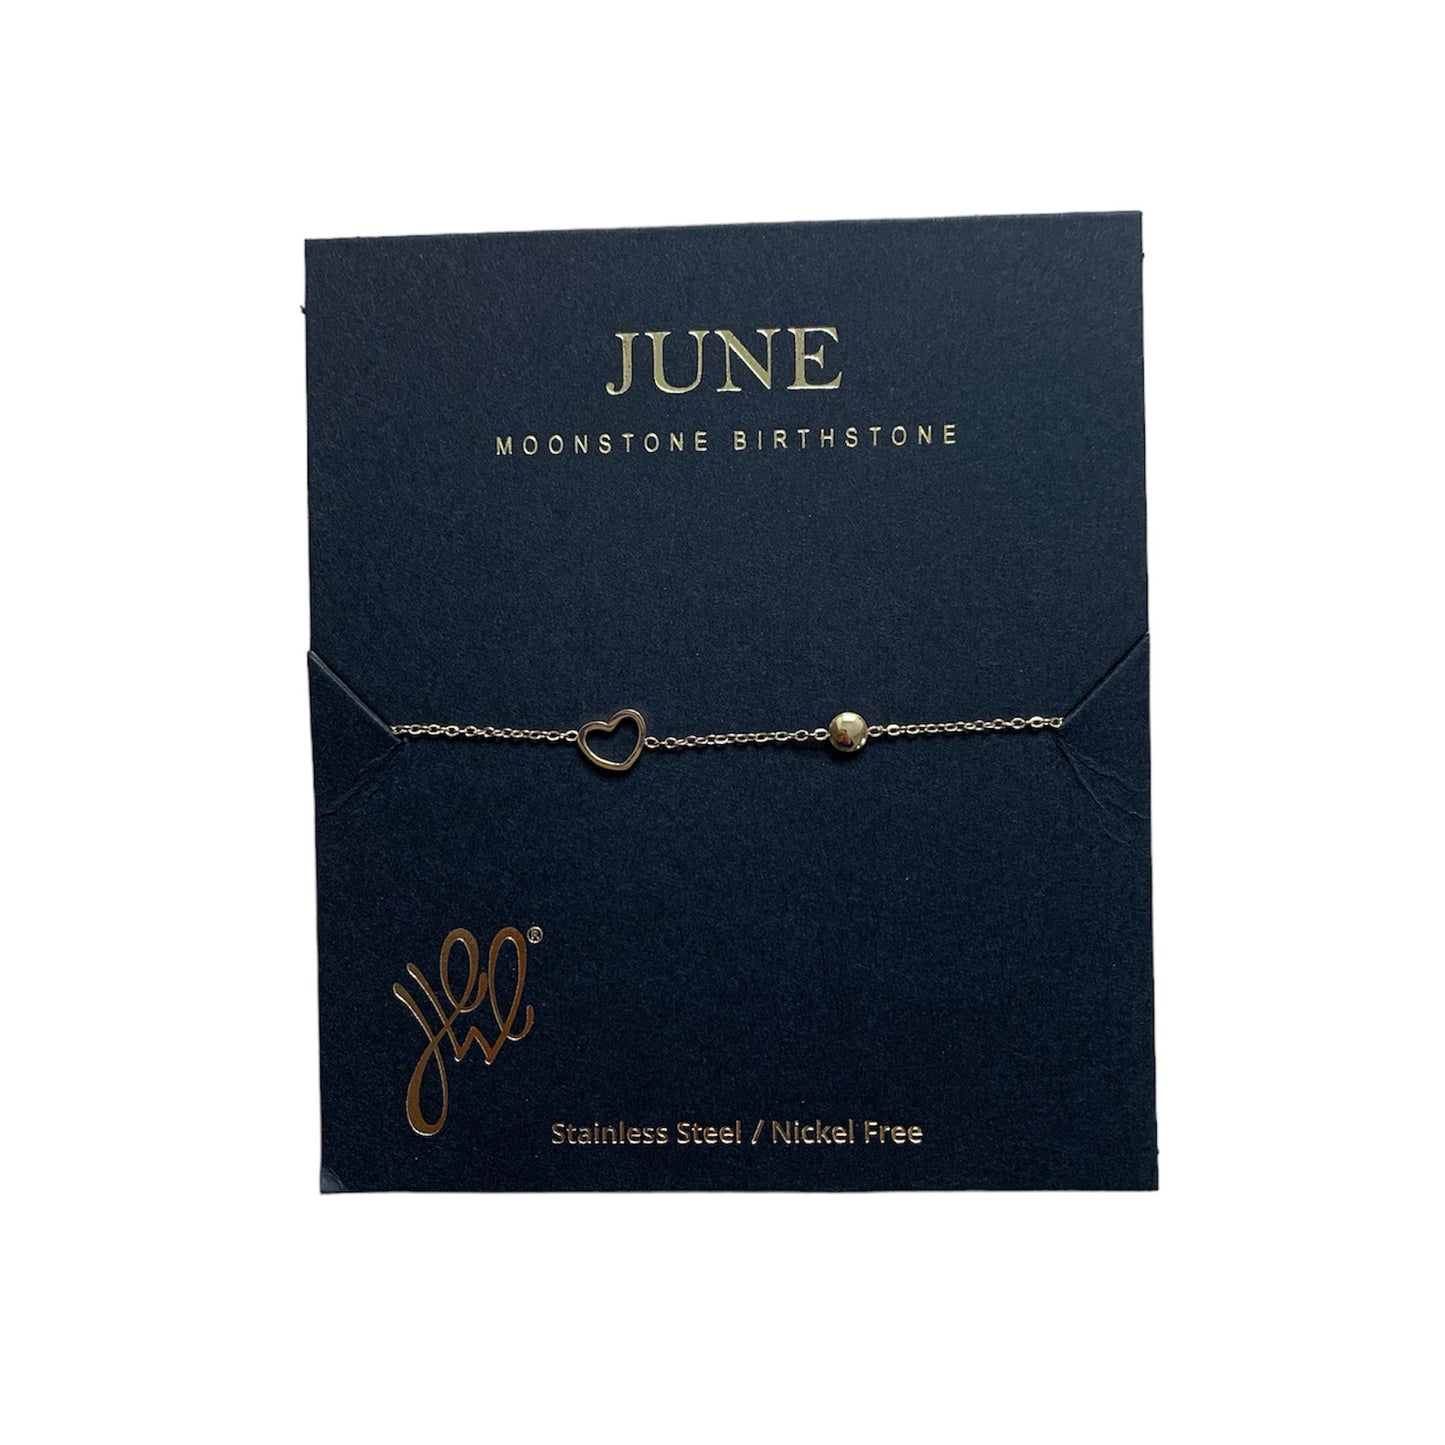 Birthstone armband - June